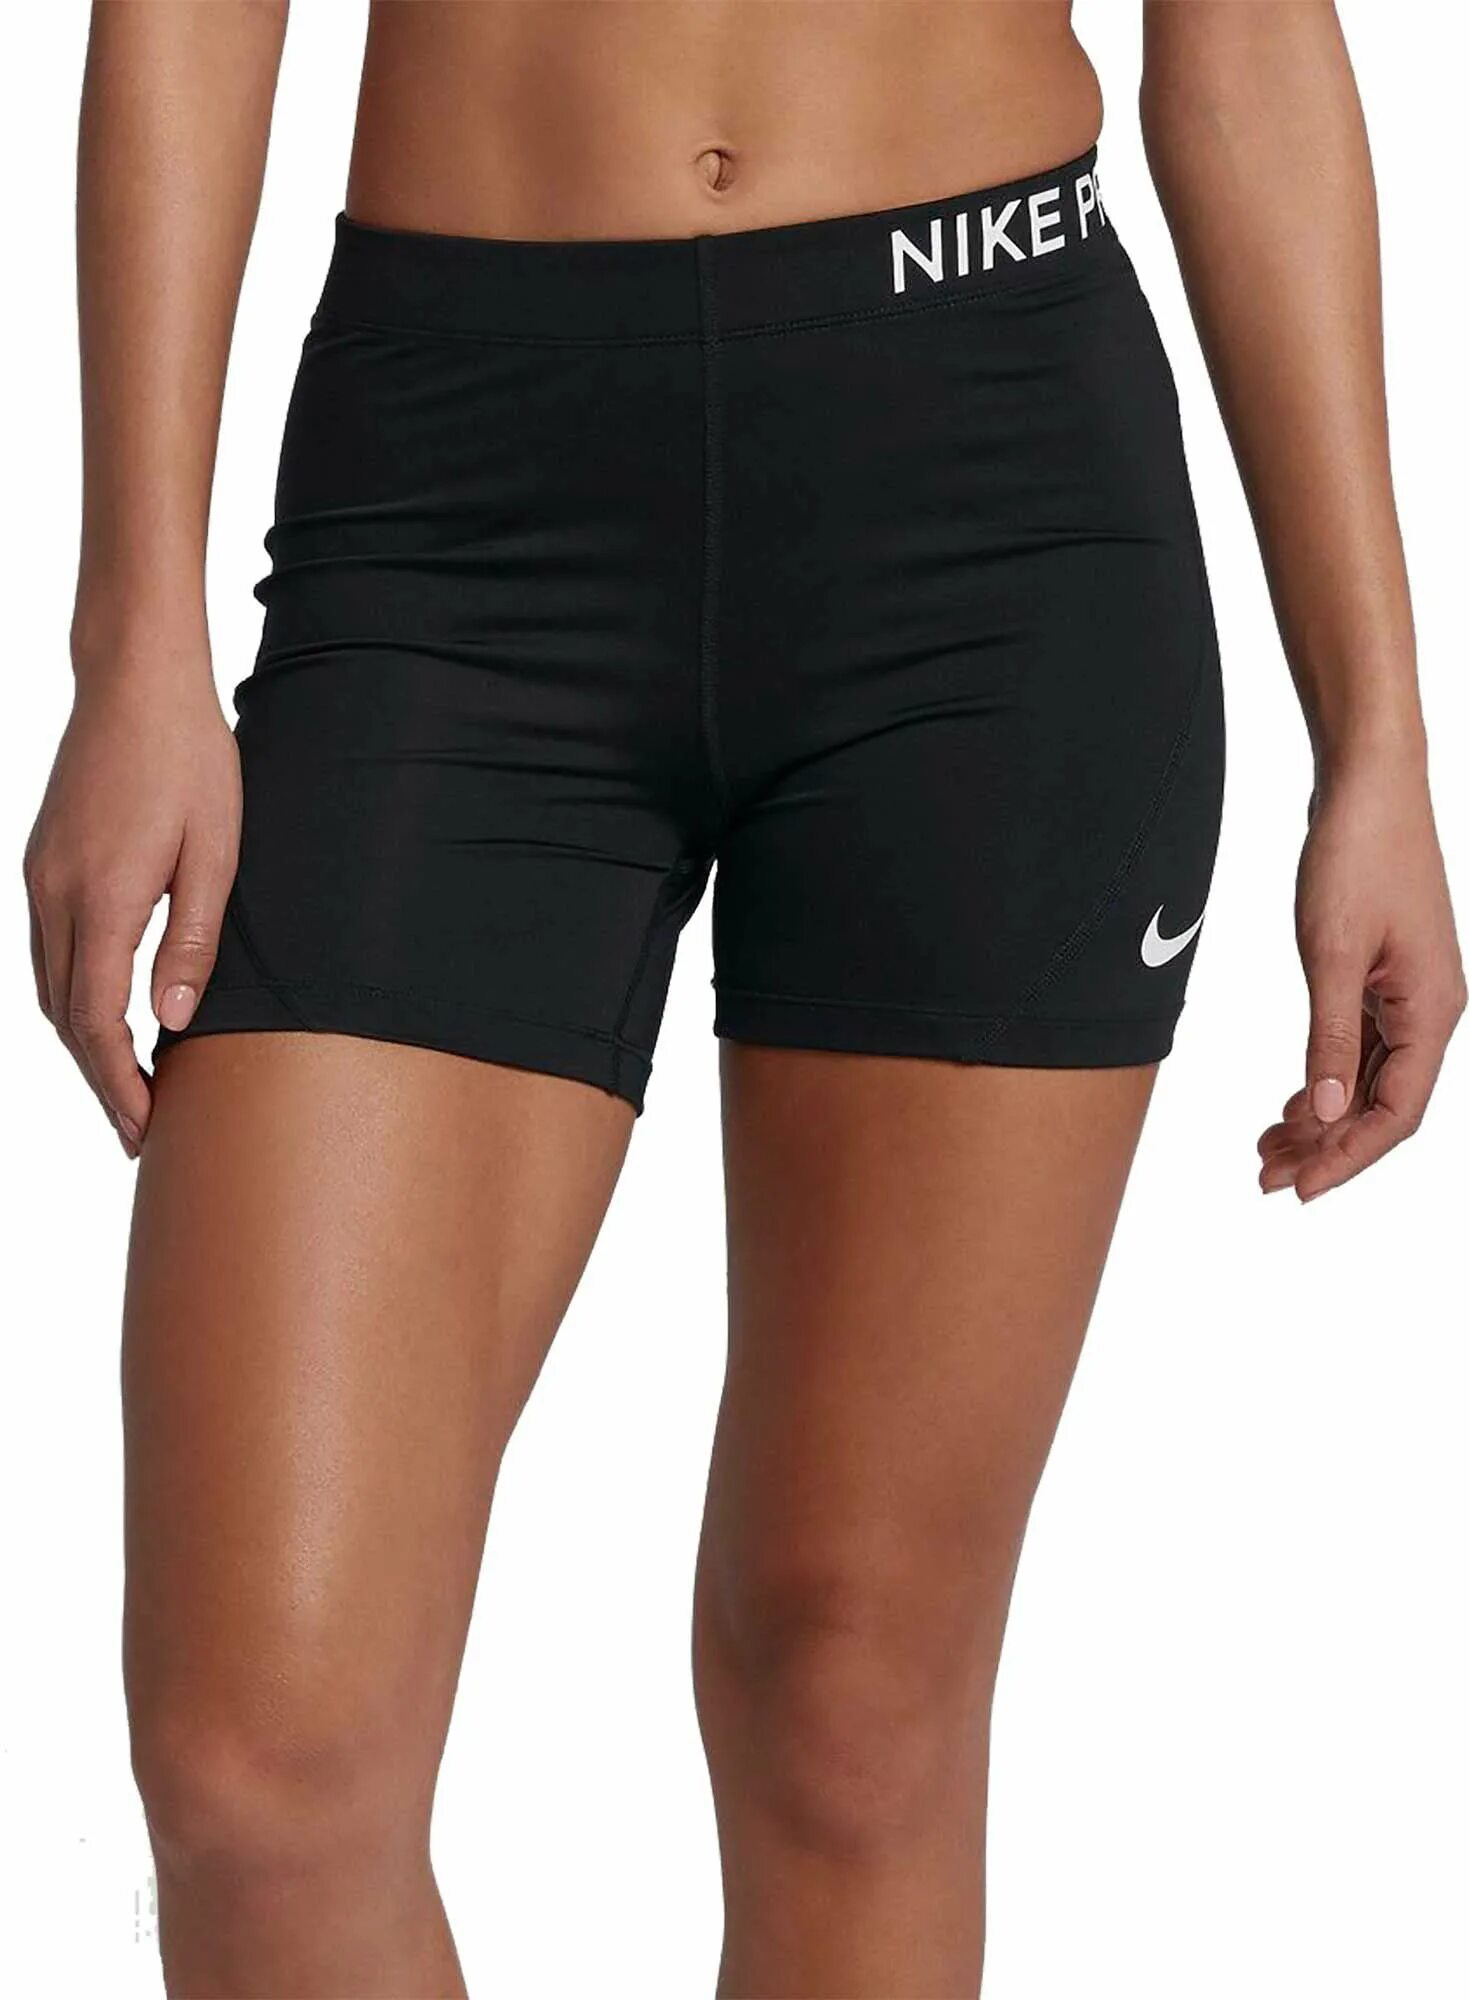 Шорты Nike Pro Dri-Fit. Шорты найк ДРИ фит. Nike шорты Dri-Fit short. Шорты Nike Dri Fit женские. Шорты для волейбола